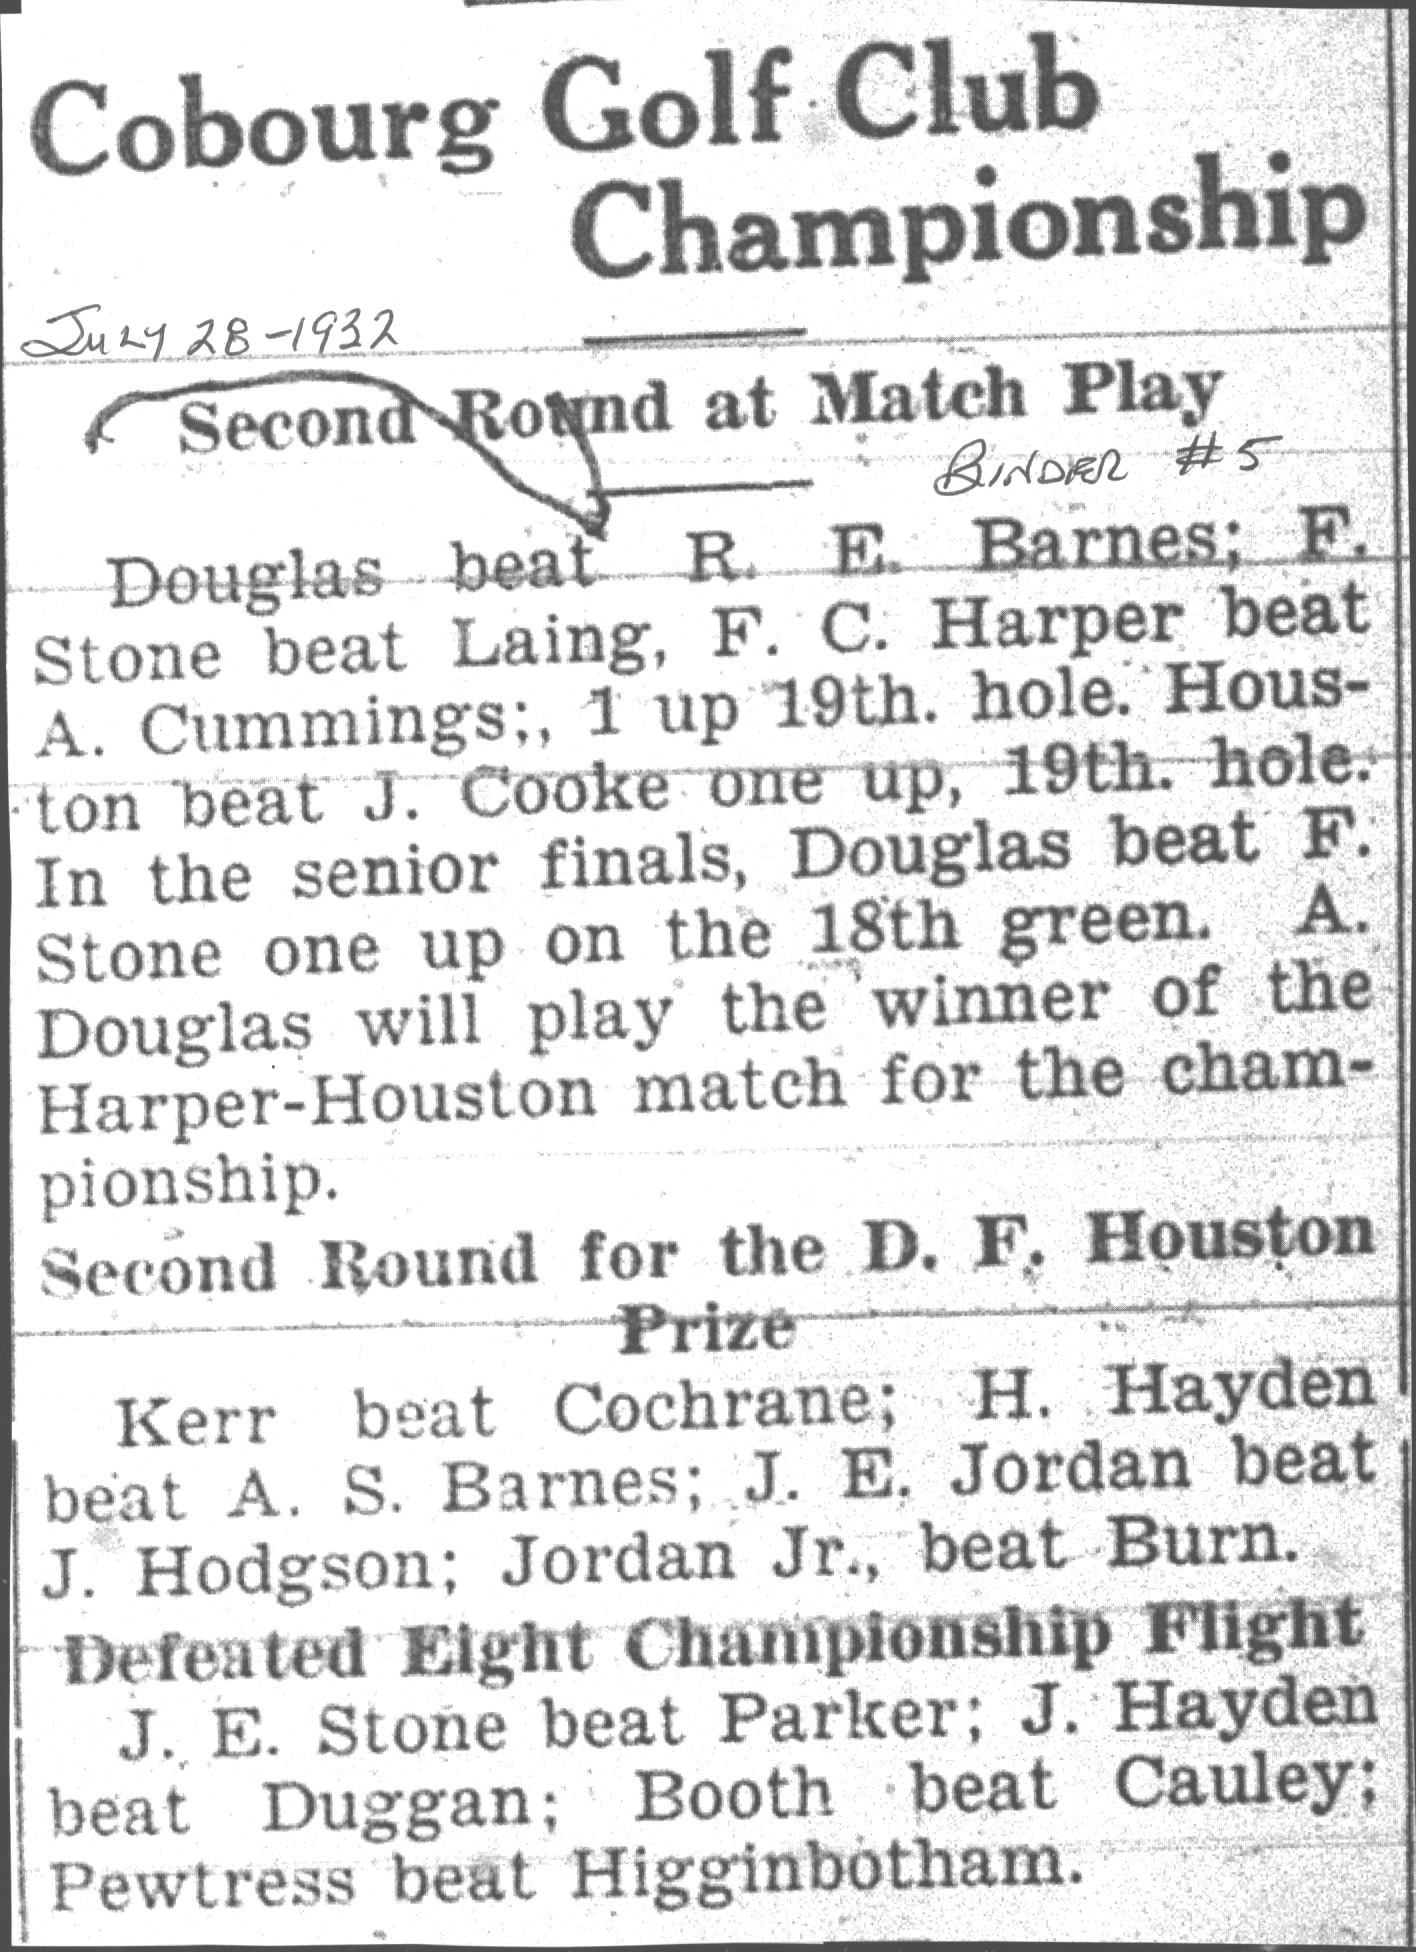 1932-07-28 Golf -Second Round Club Championships